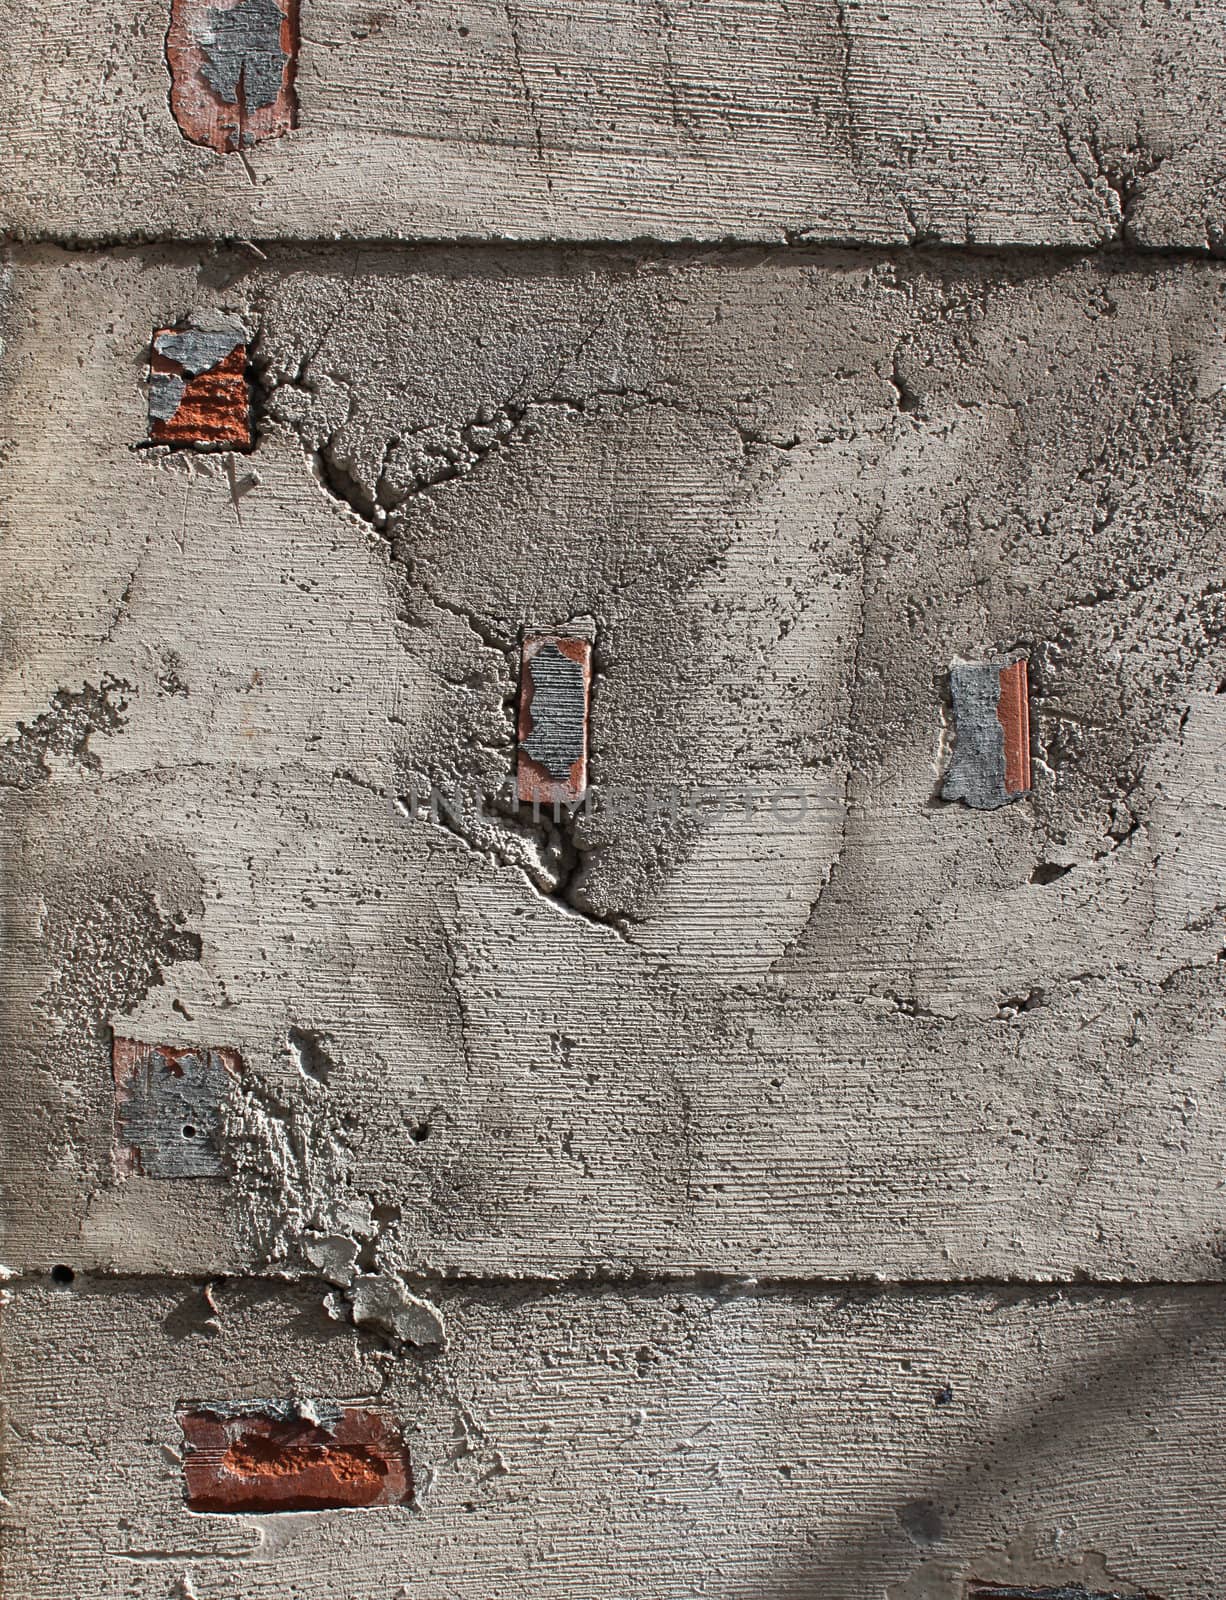 Cracked concrete wall by anterovium